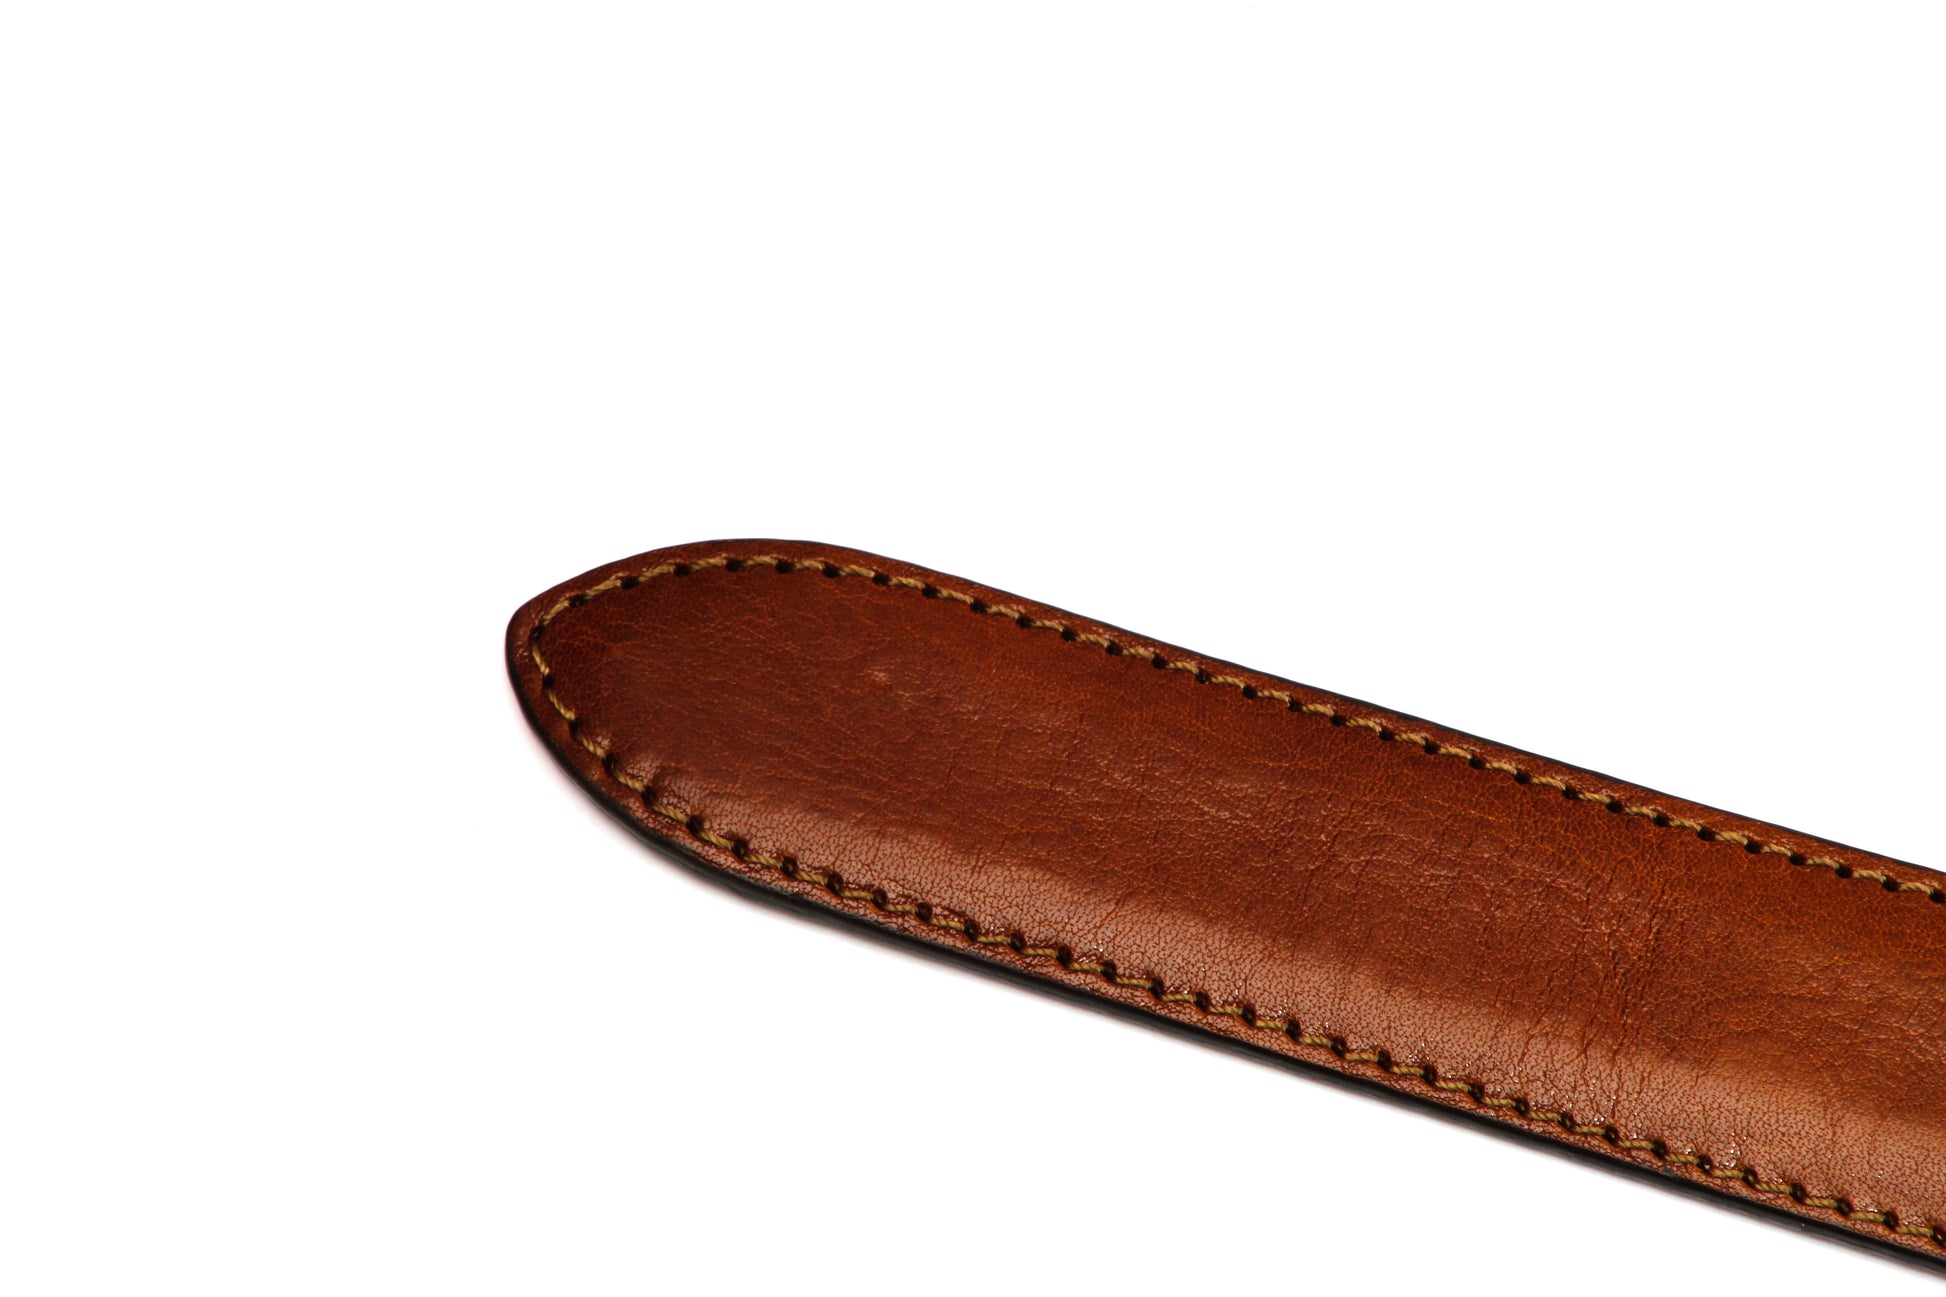 Men's Italian calfskin belt strap in cognac with a 1.25-inch width, formal look, tip of the strap